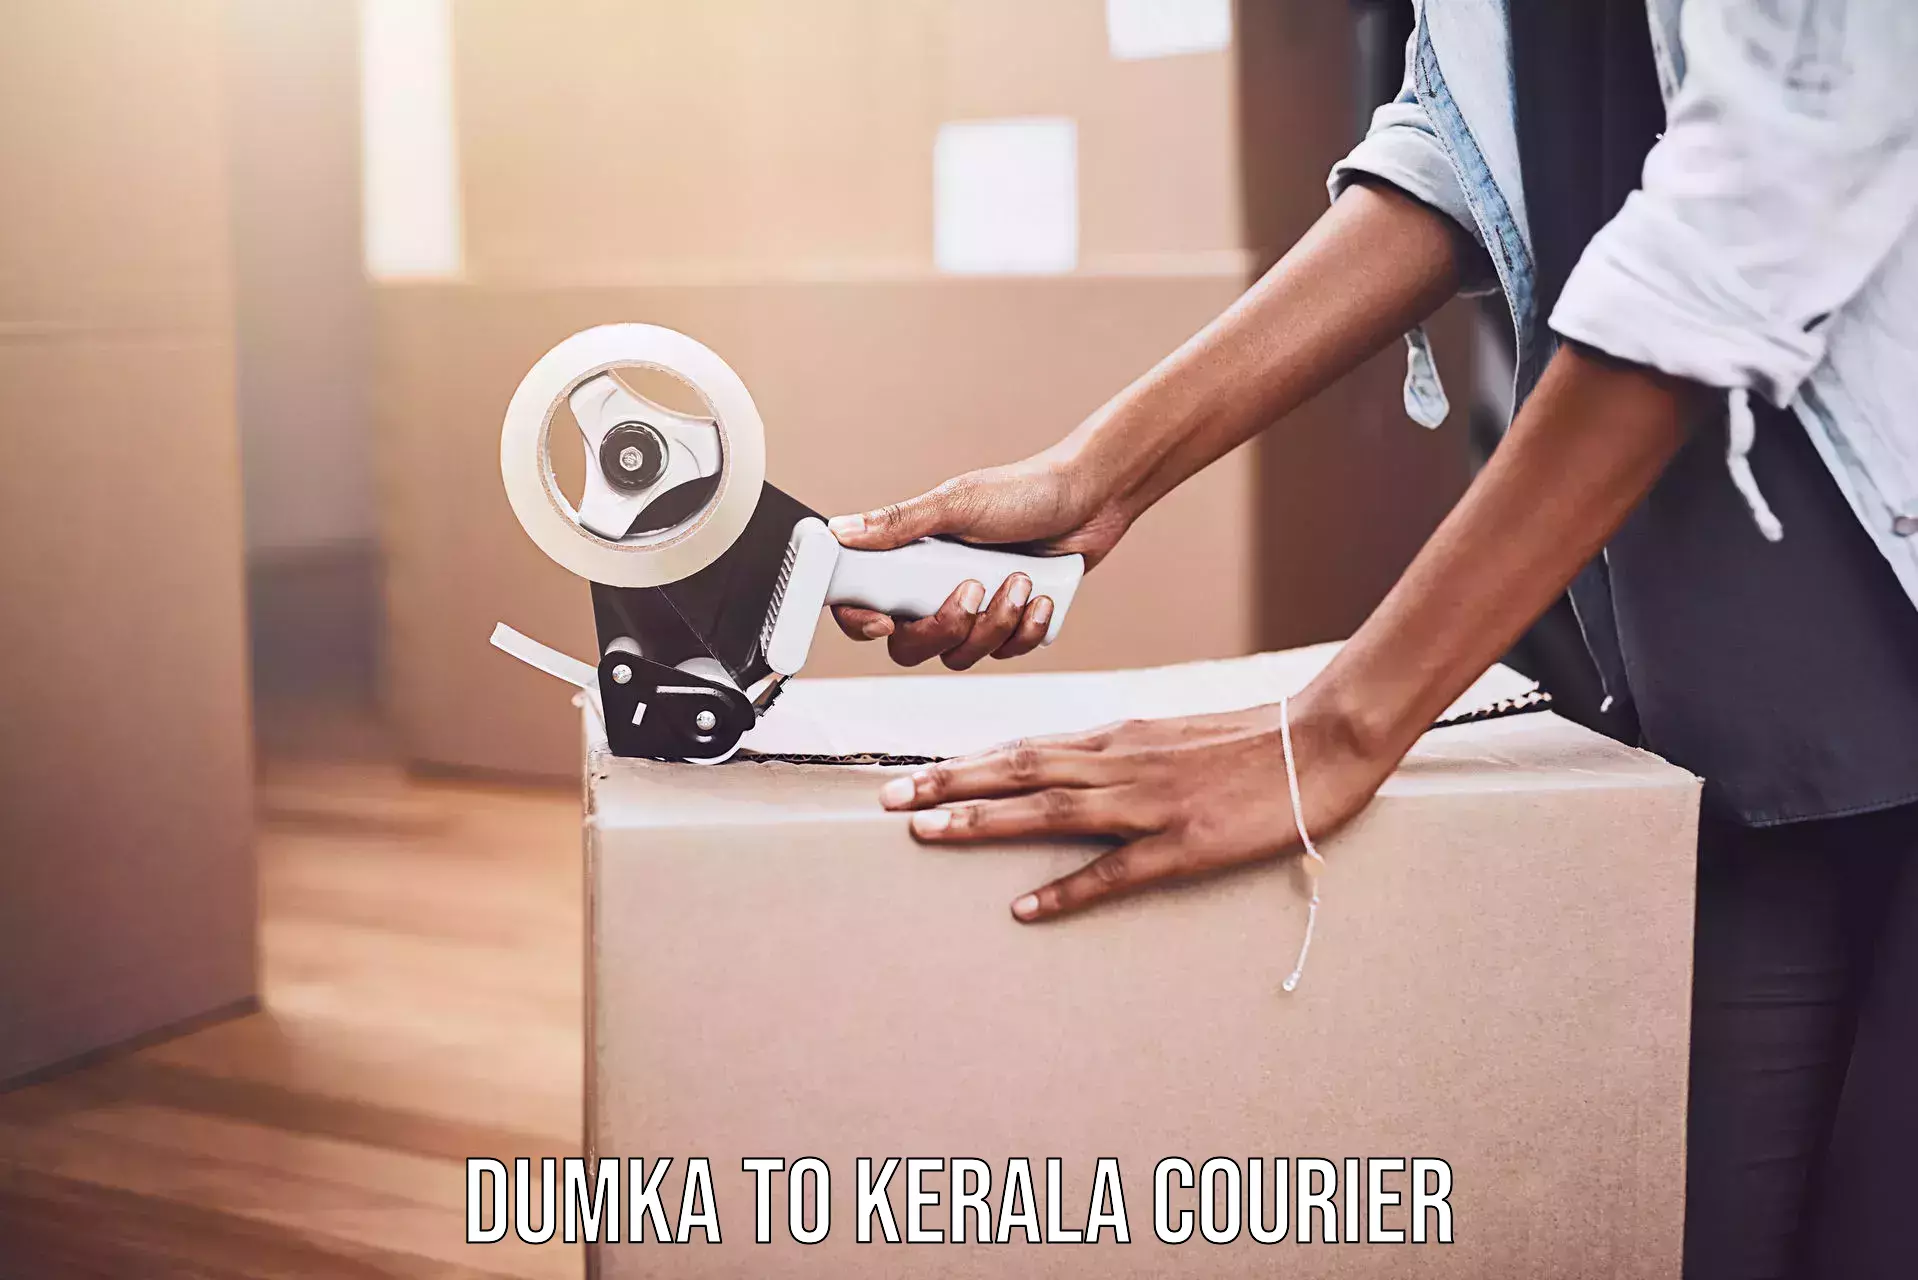 Quick parcel dispatch in Dumka to Guruvayur